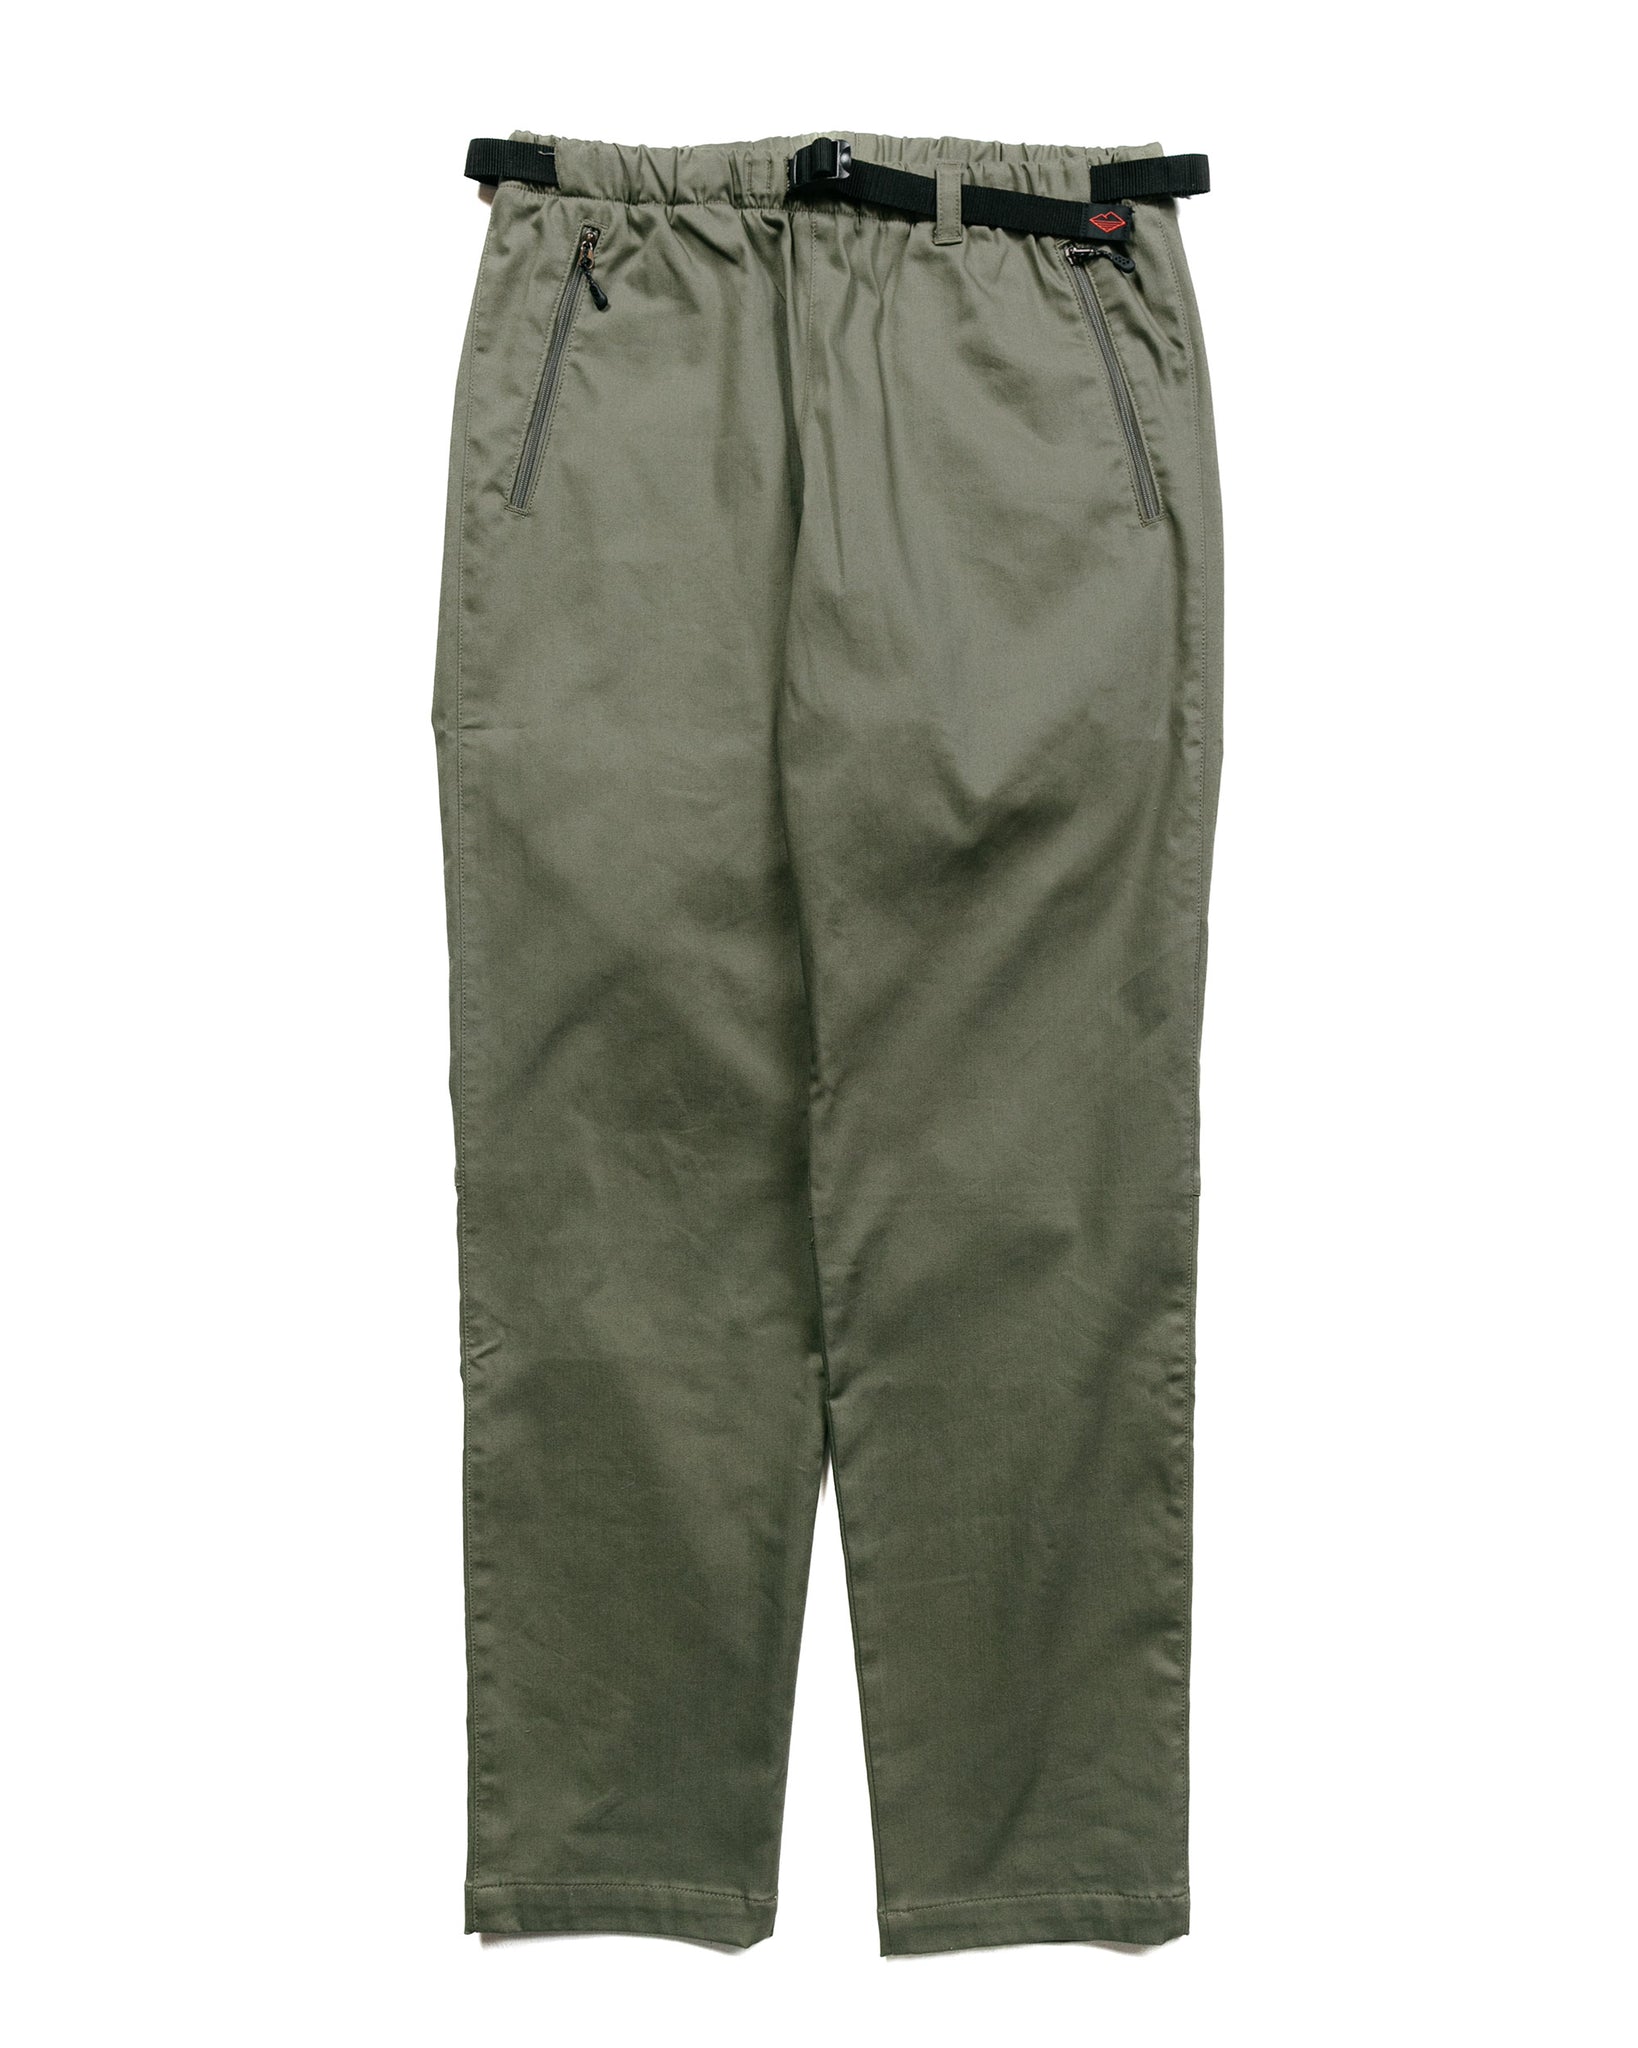 VietClimb - Shopping Time > < E9 Climbing Pants for sale